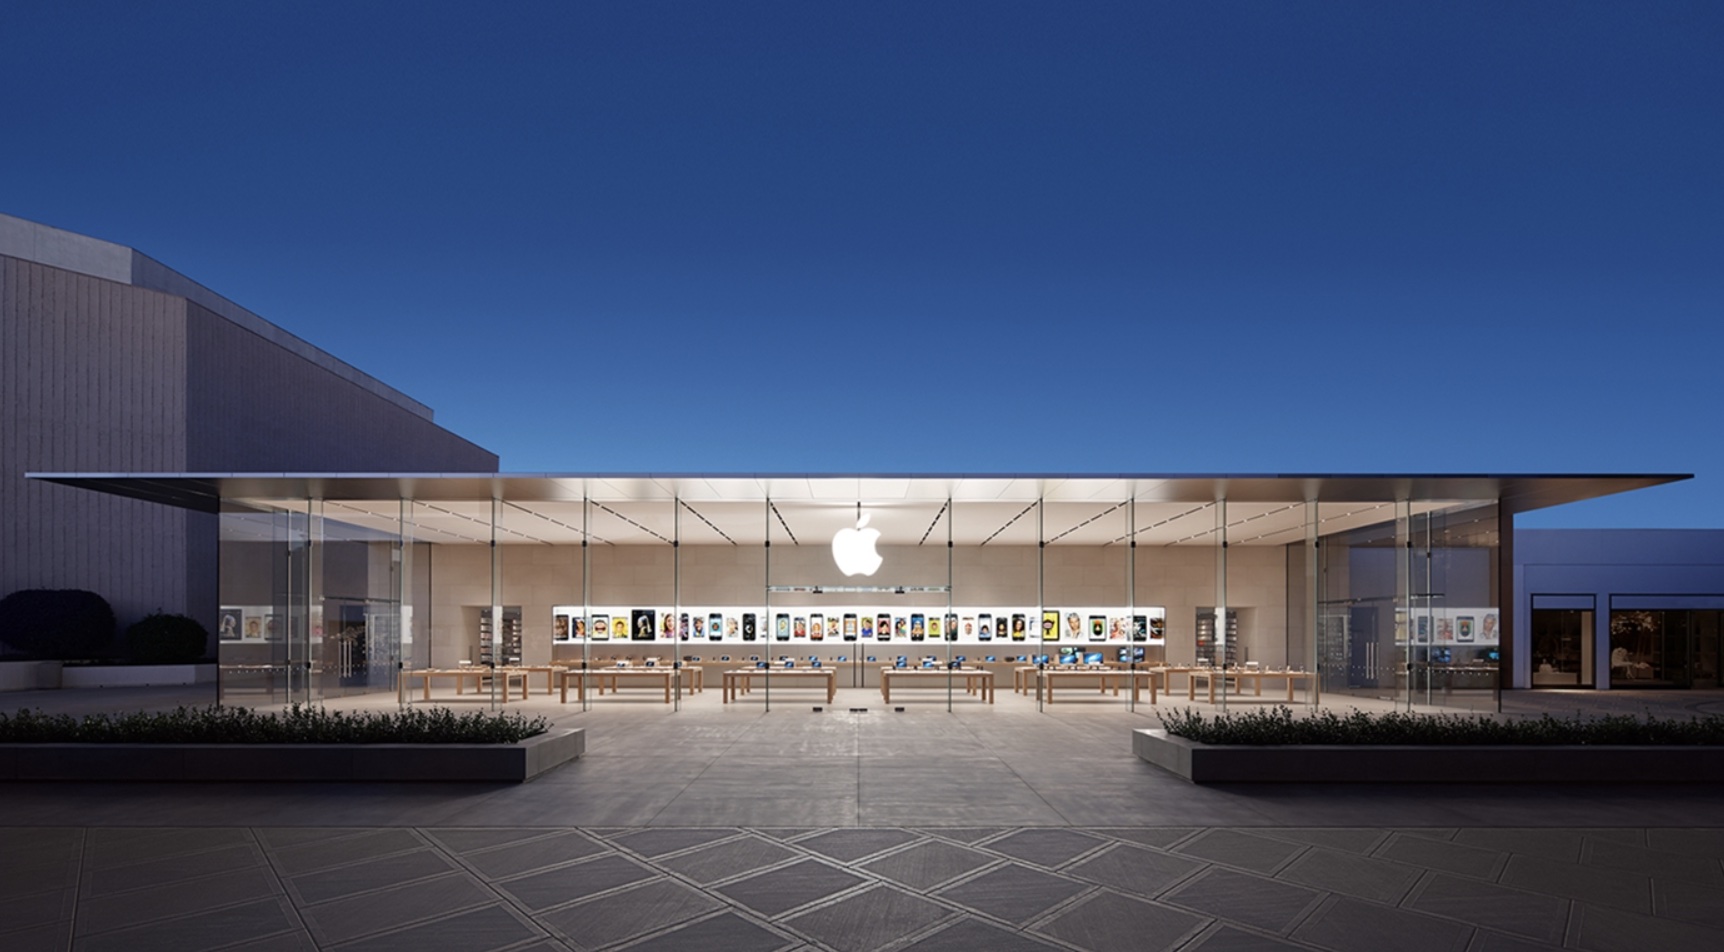 apple store locations